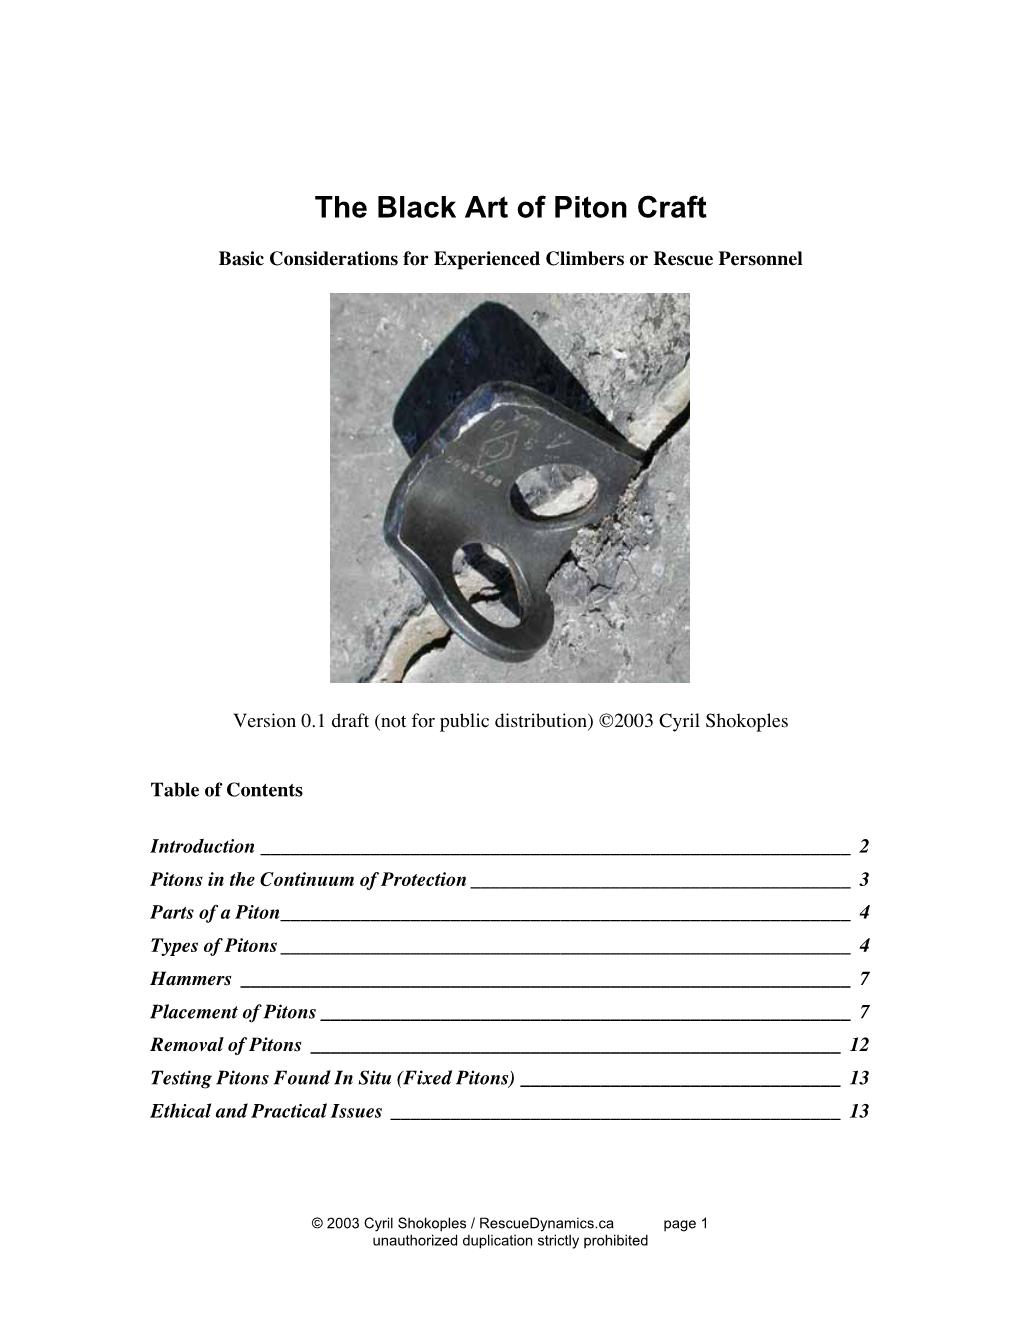 The Black Art of Piton Craft